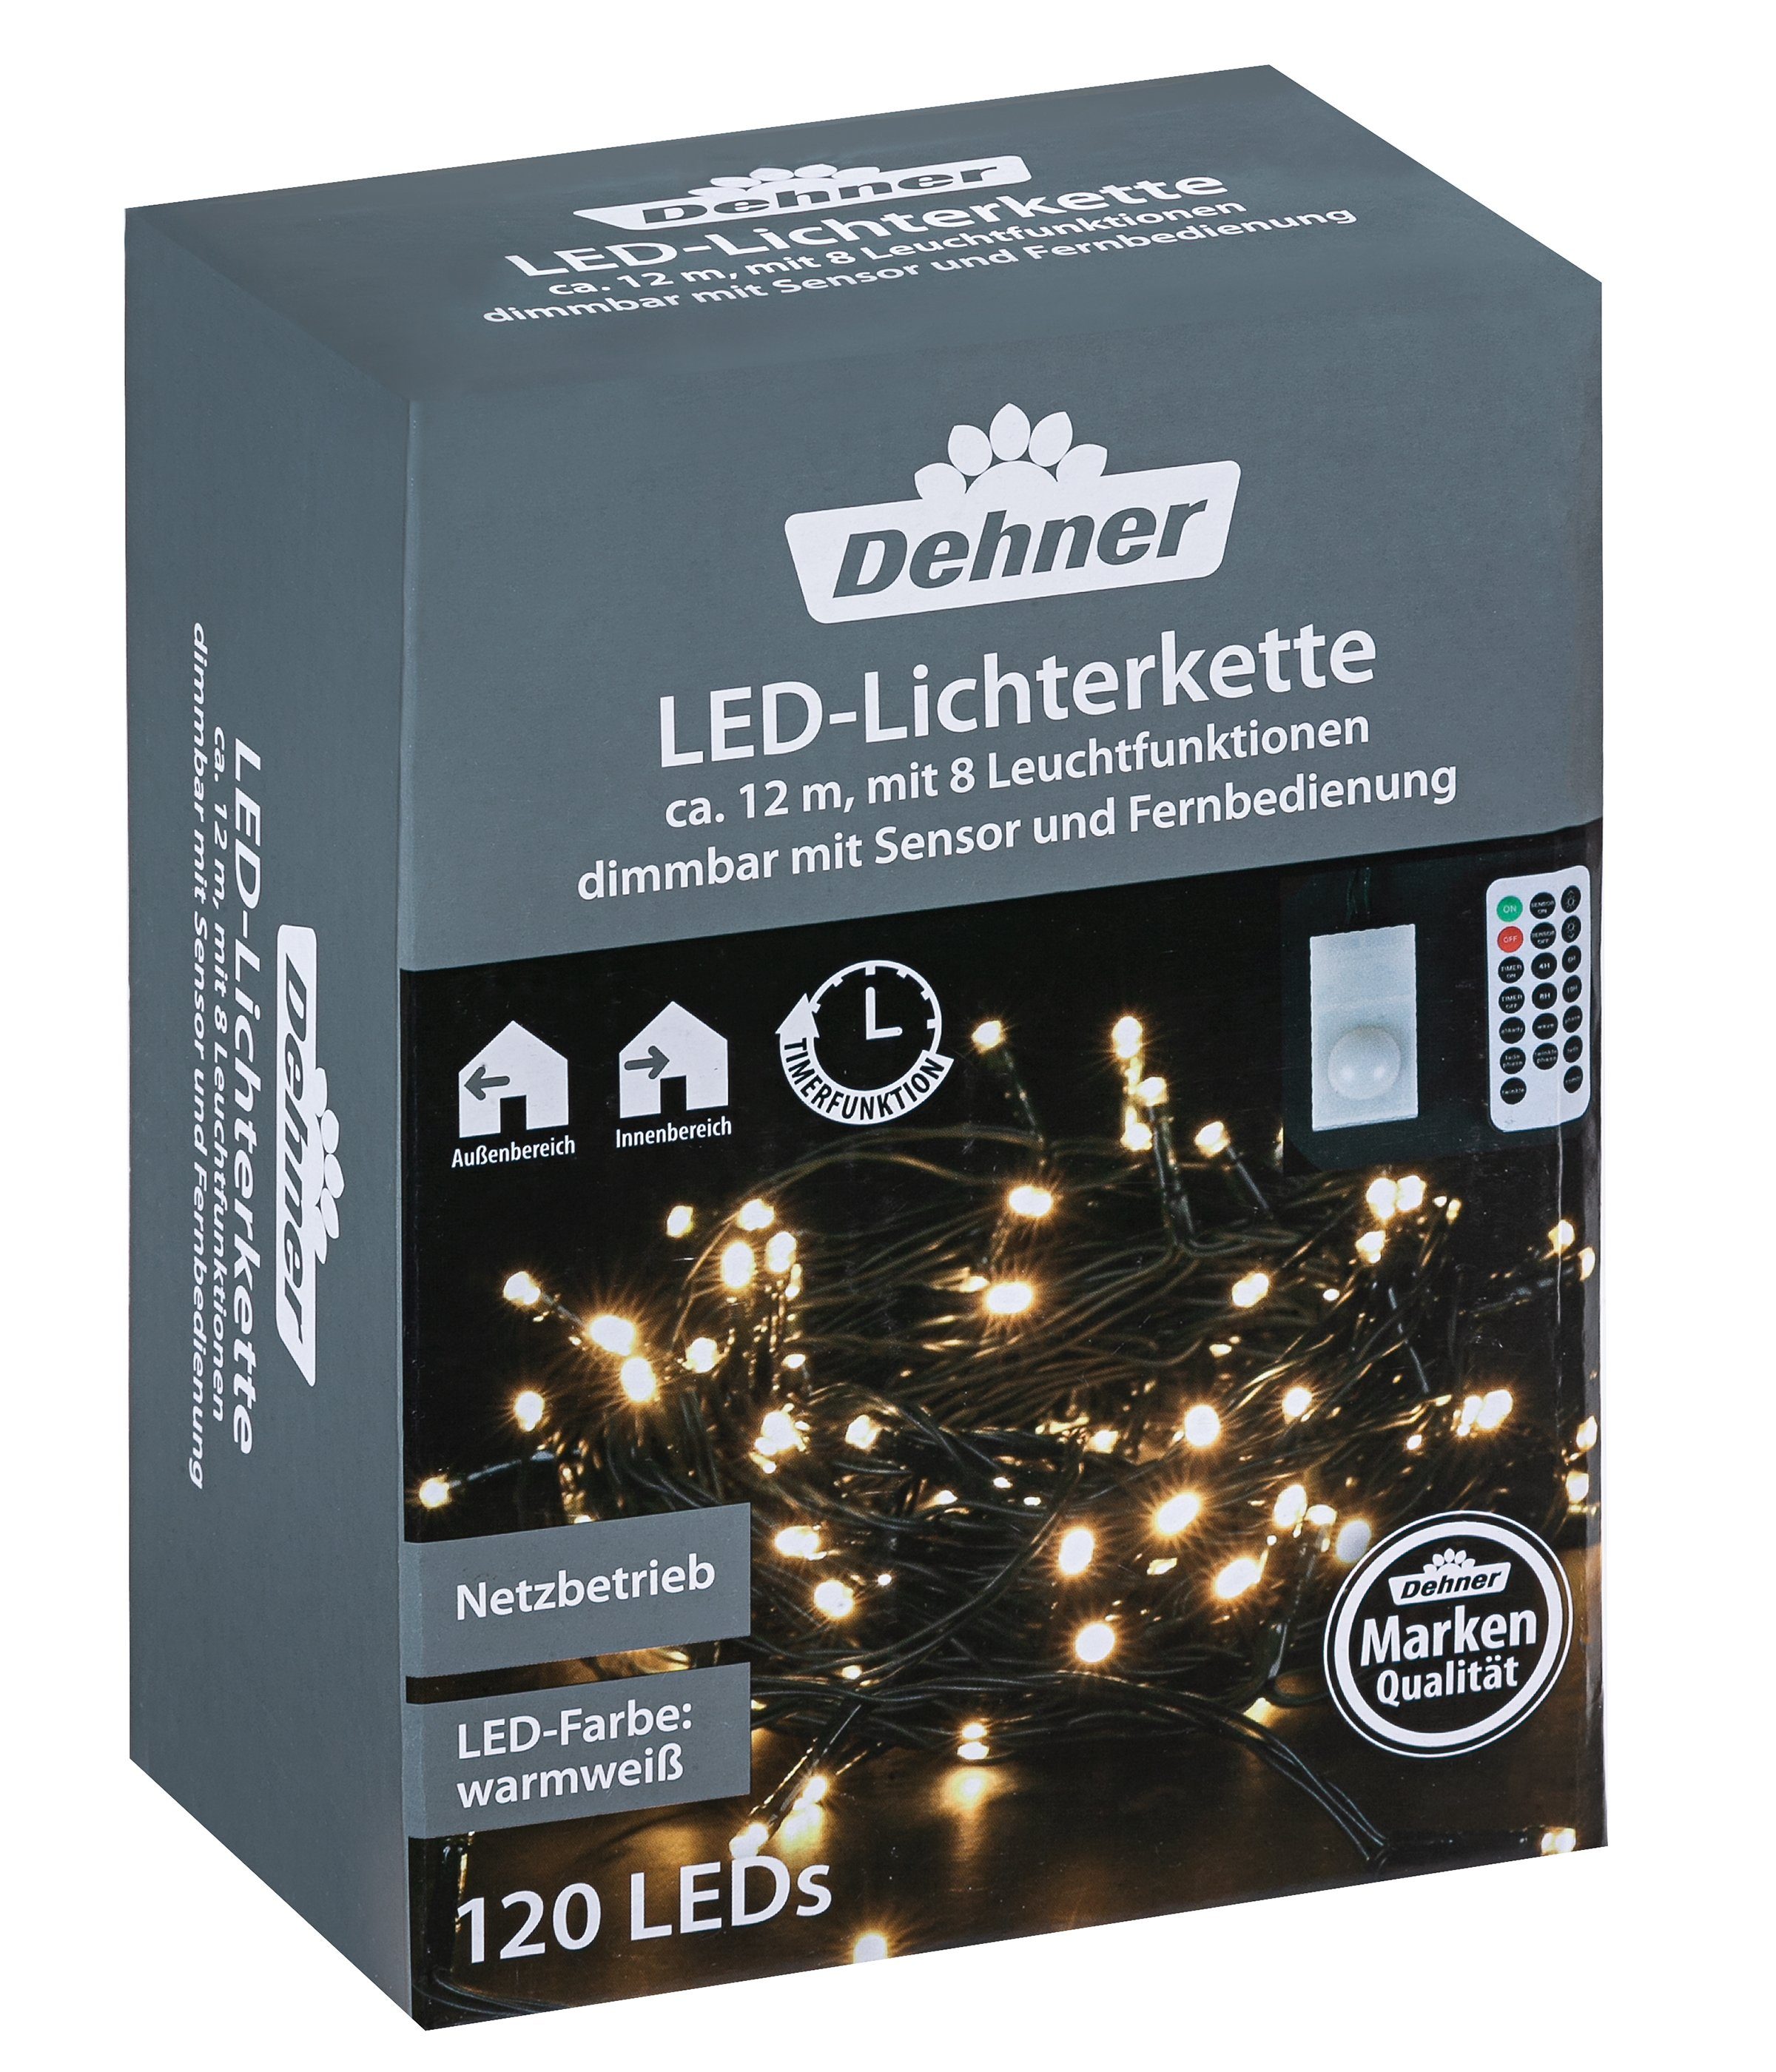 Dehner LED-Lichterkette LED-Lichterkette mit Sensor, 120 LEDs, Länge 12 m, wetterfest, dimmbar, Indoor/Outdoor, Timer, 8 Modi, Fernbedienung | Lichterketten